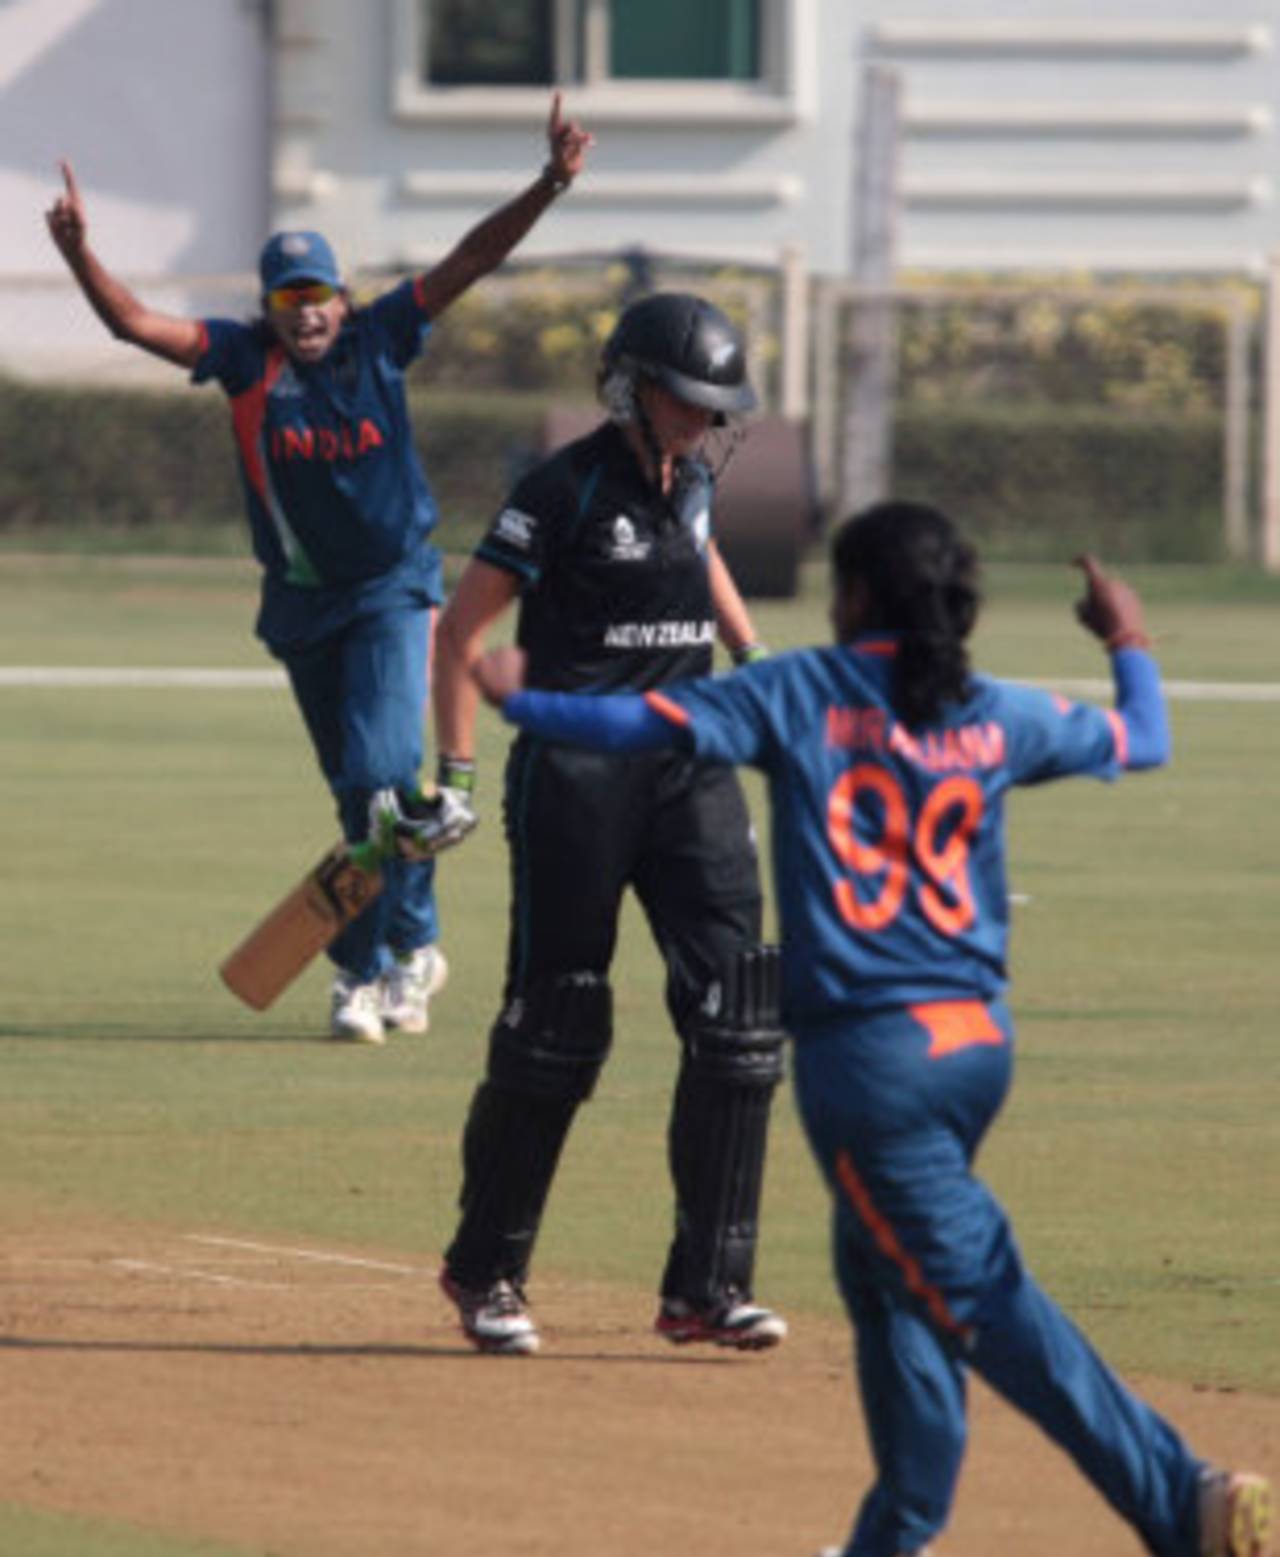 Hosts India won their warm-up fixture against New Zealand&nbsp;&nbsp;&bull;&nbsp;&nbsp;ICC/Solaris Images